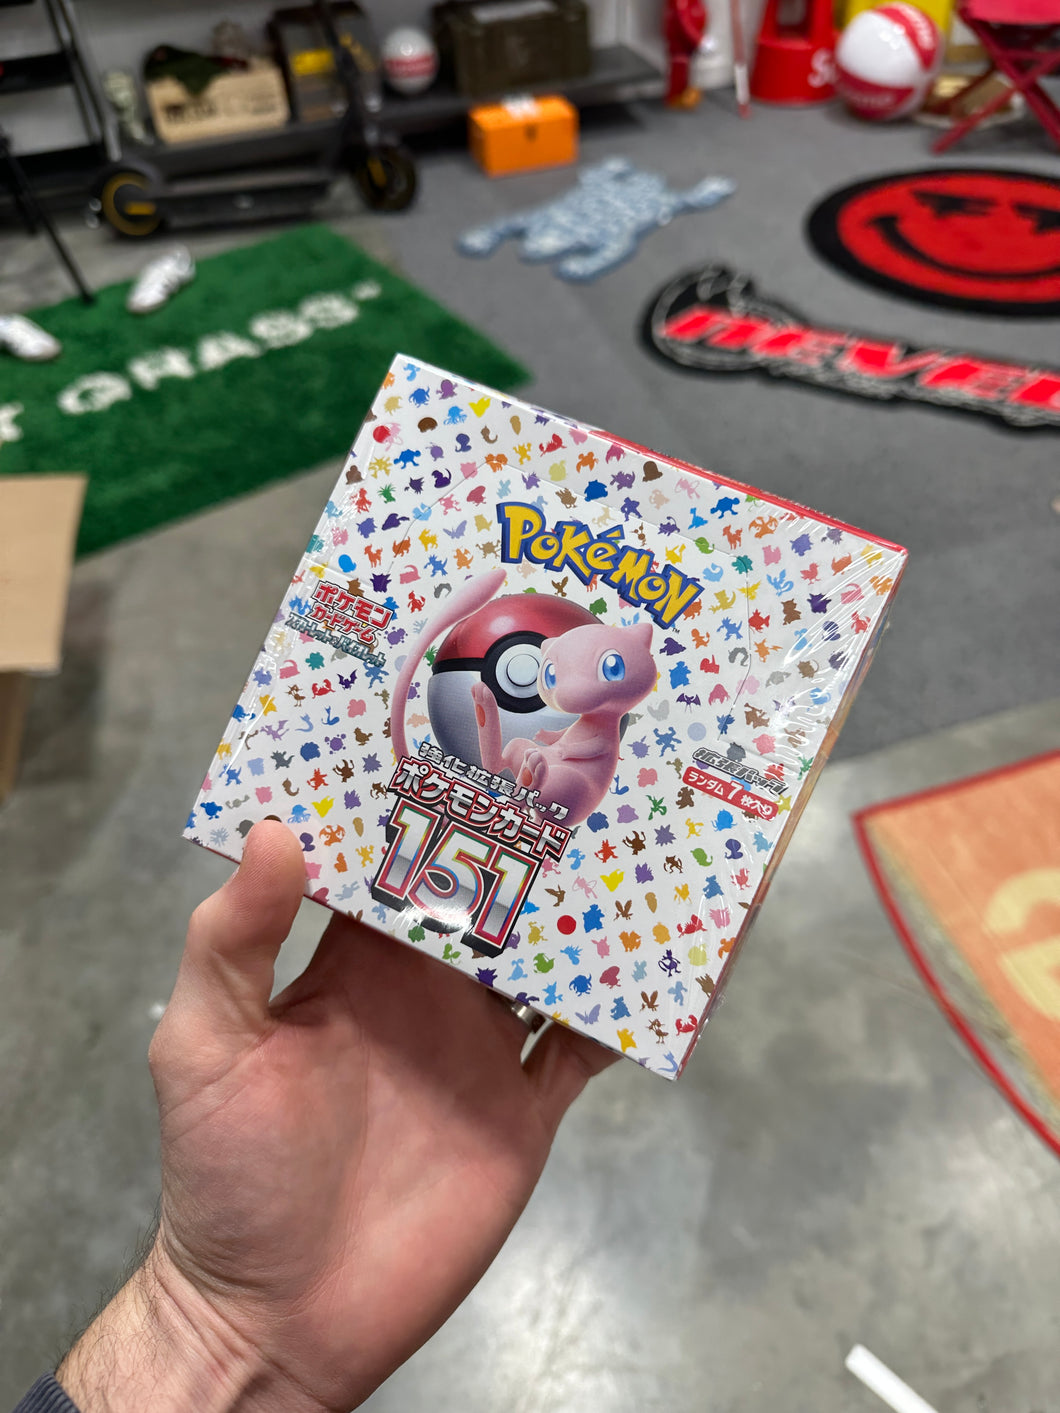 Japanese Pokemon 151 Booster Box